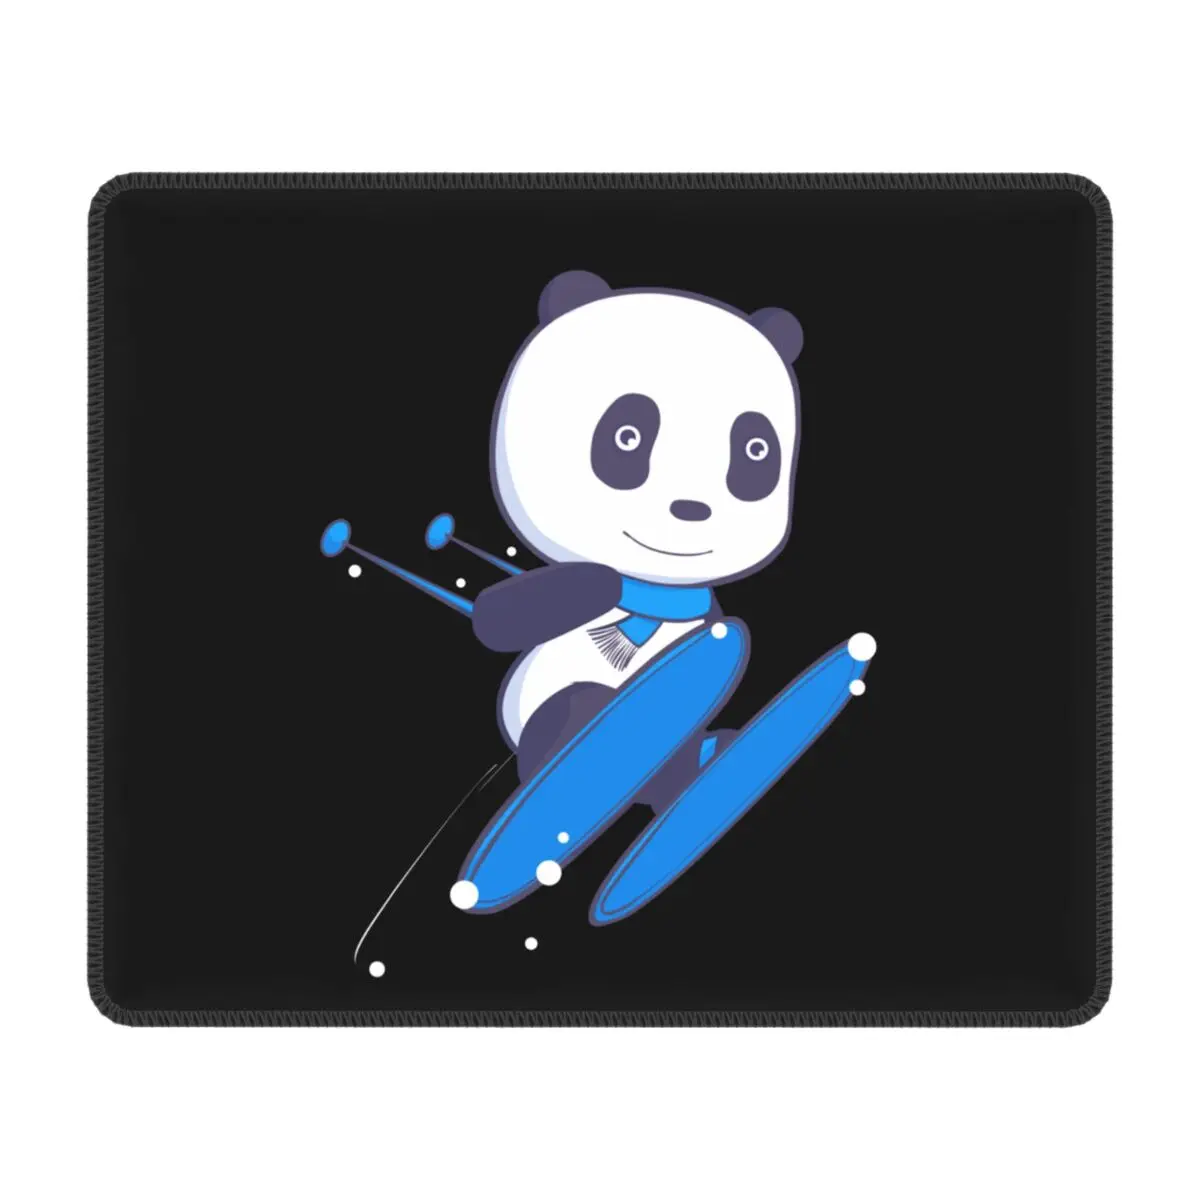 Giant Panda Skiing Mouse Pad Customized Non-Slip Rubber Base Gaming Mousepad Accessories Funny Panda Bear Office Desktop Mat